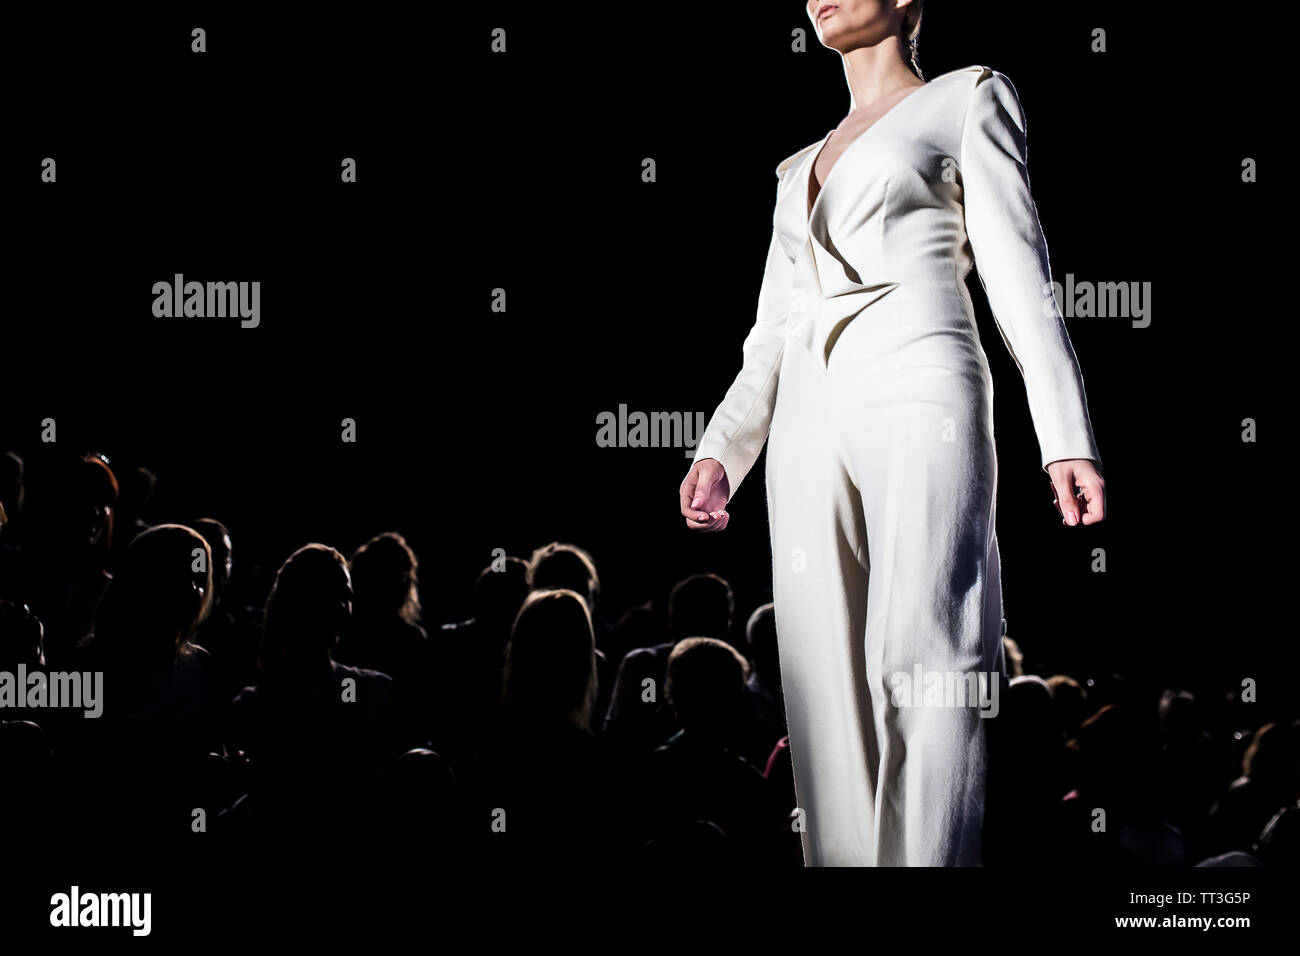 Fashion Show, Catwalk Event, Runway Show themed photo Stock Photo - Alamy